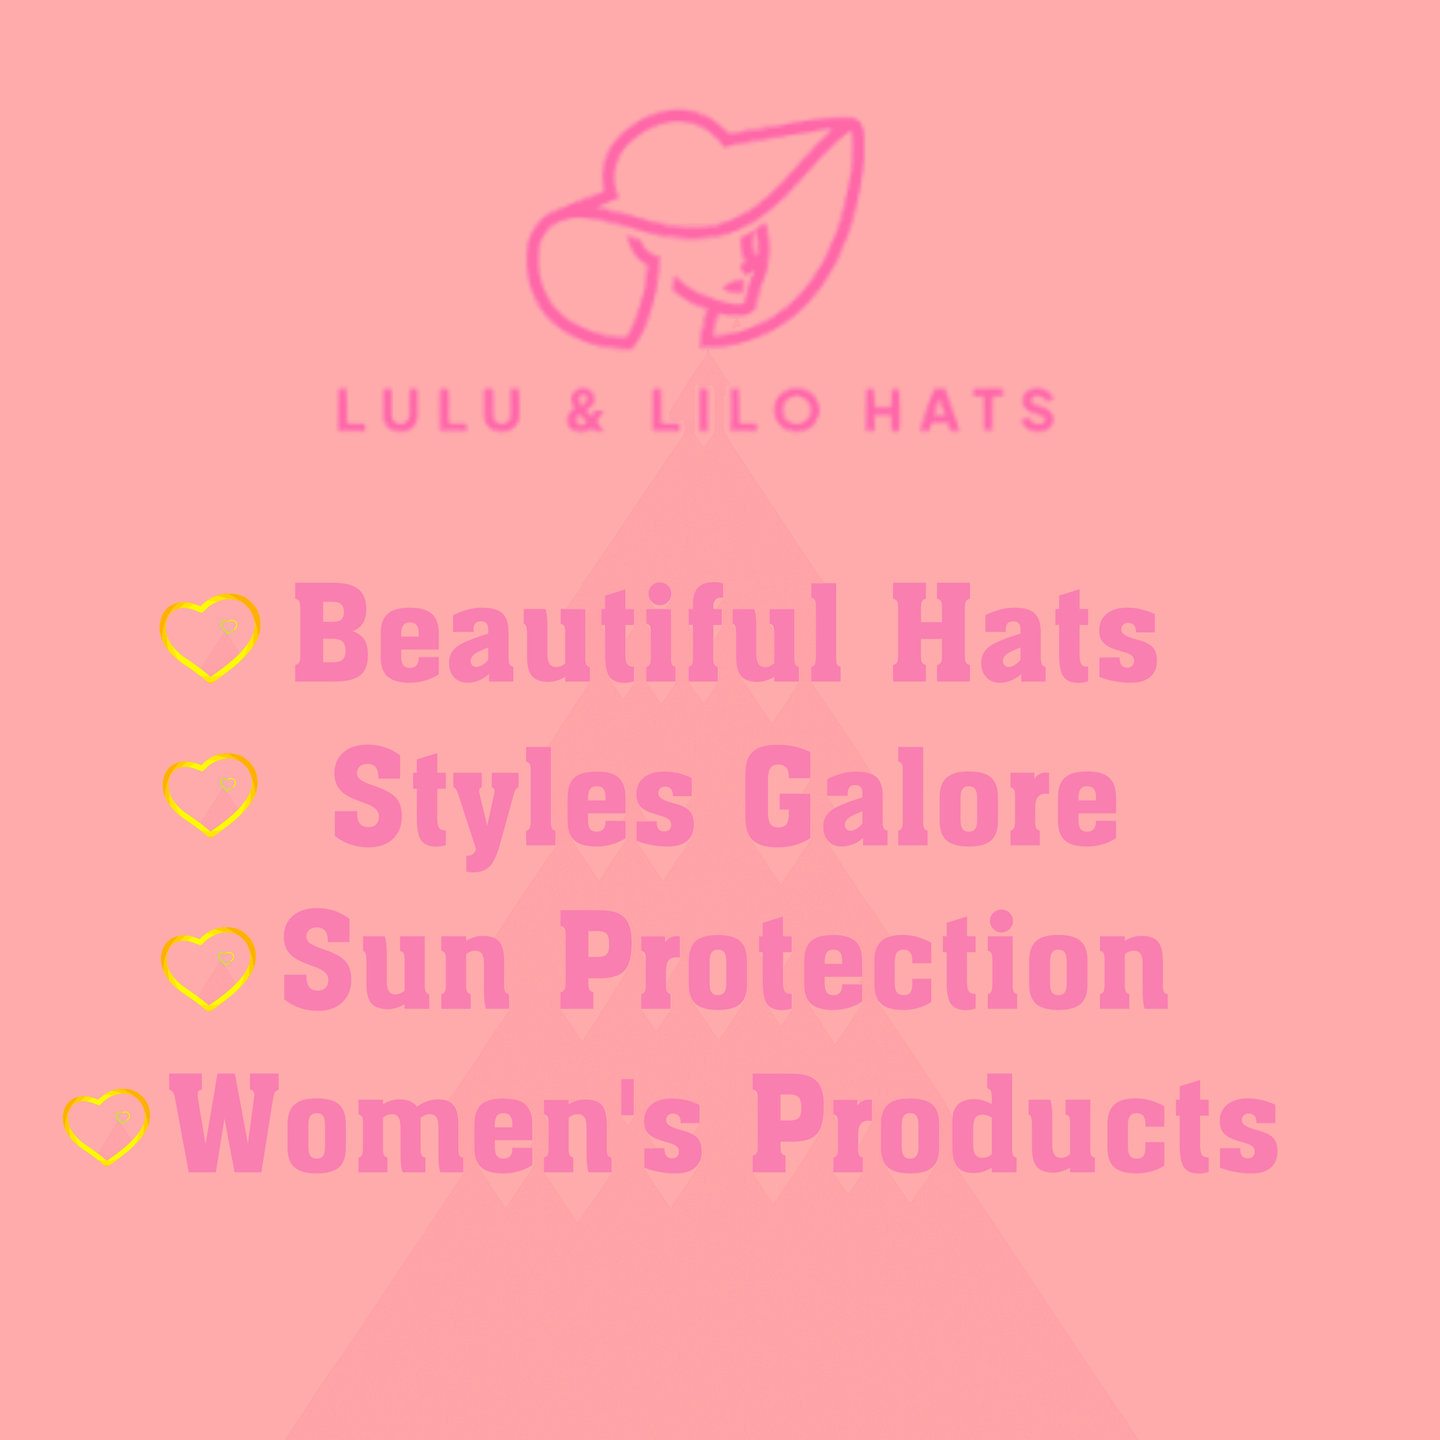 Lulu & Lilo Women's Flower Sun hats - PremiumBrandGoods